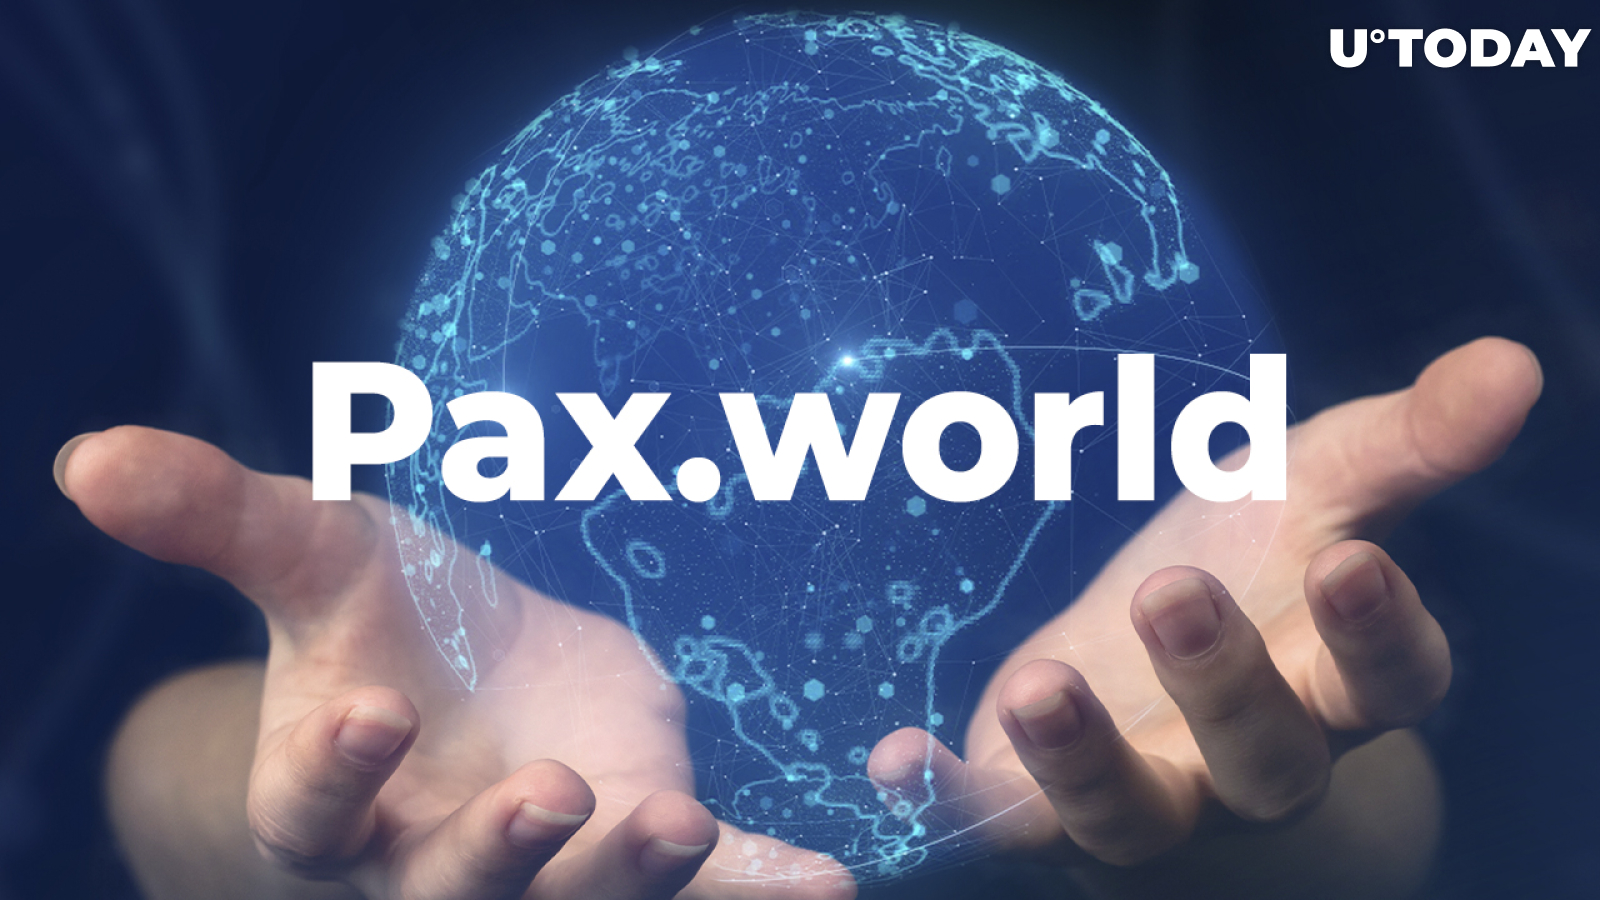 Pax.world Platform Changes Narrative in Metaverse Experience: Details